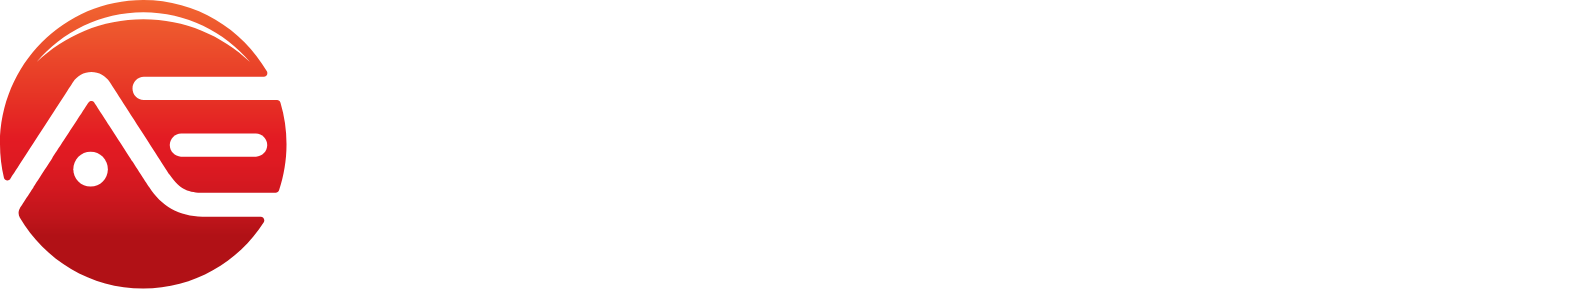 Alliance Entertainment Logo groß für dunkle Hintergründe (transparentes PNG)